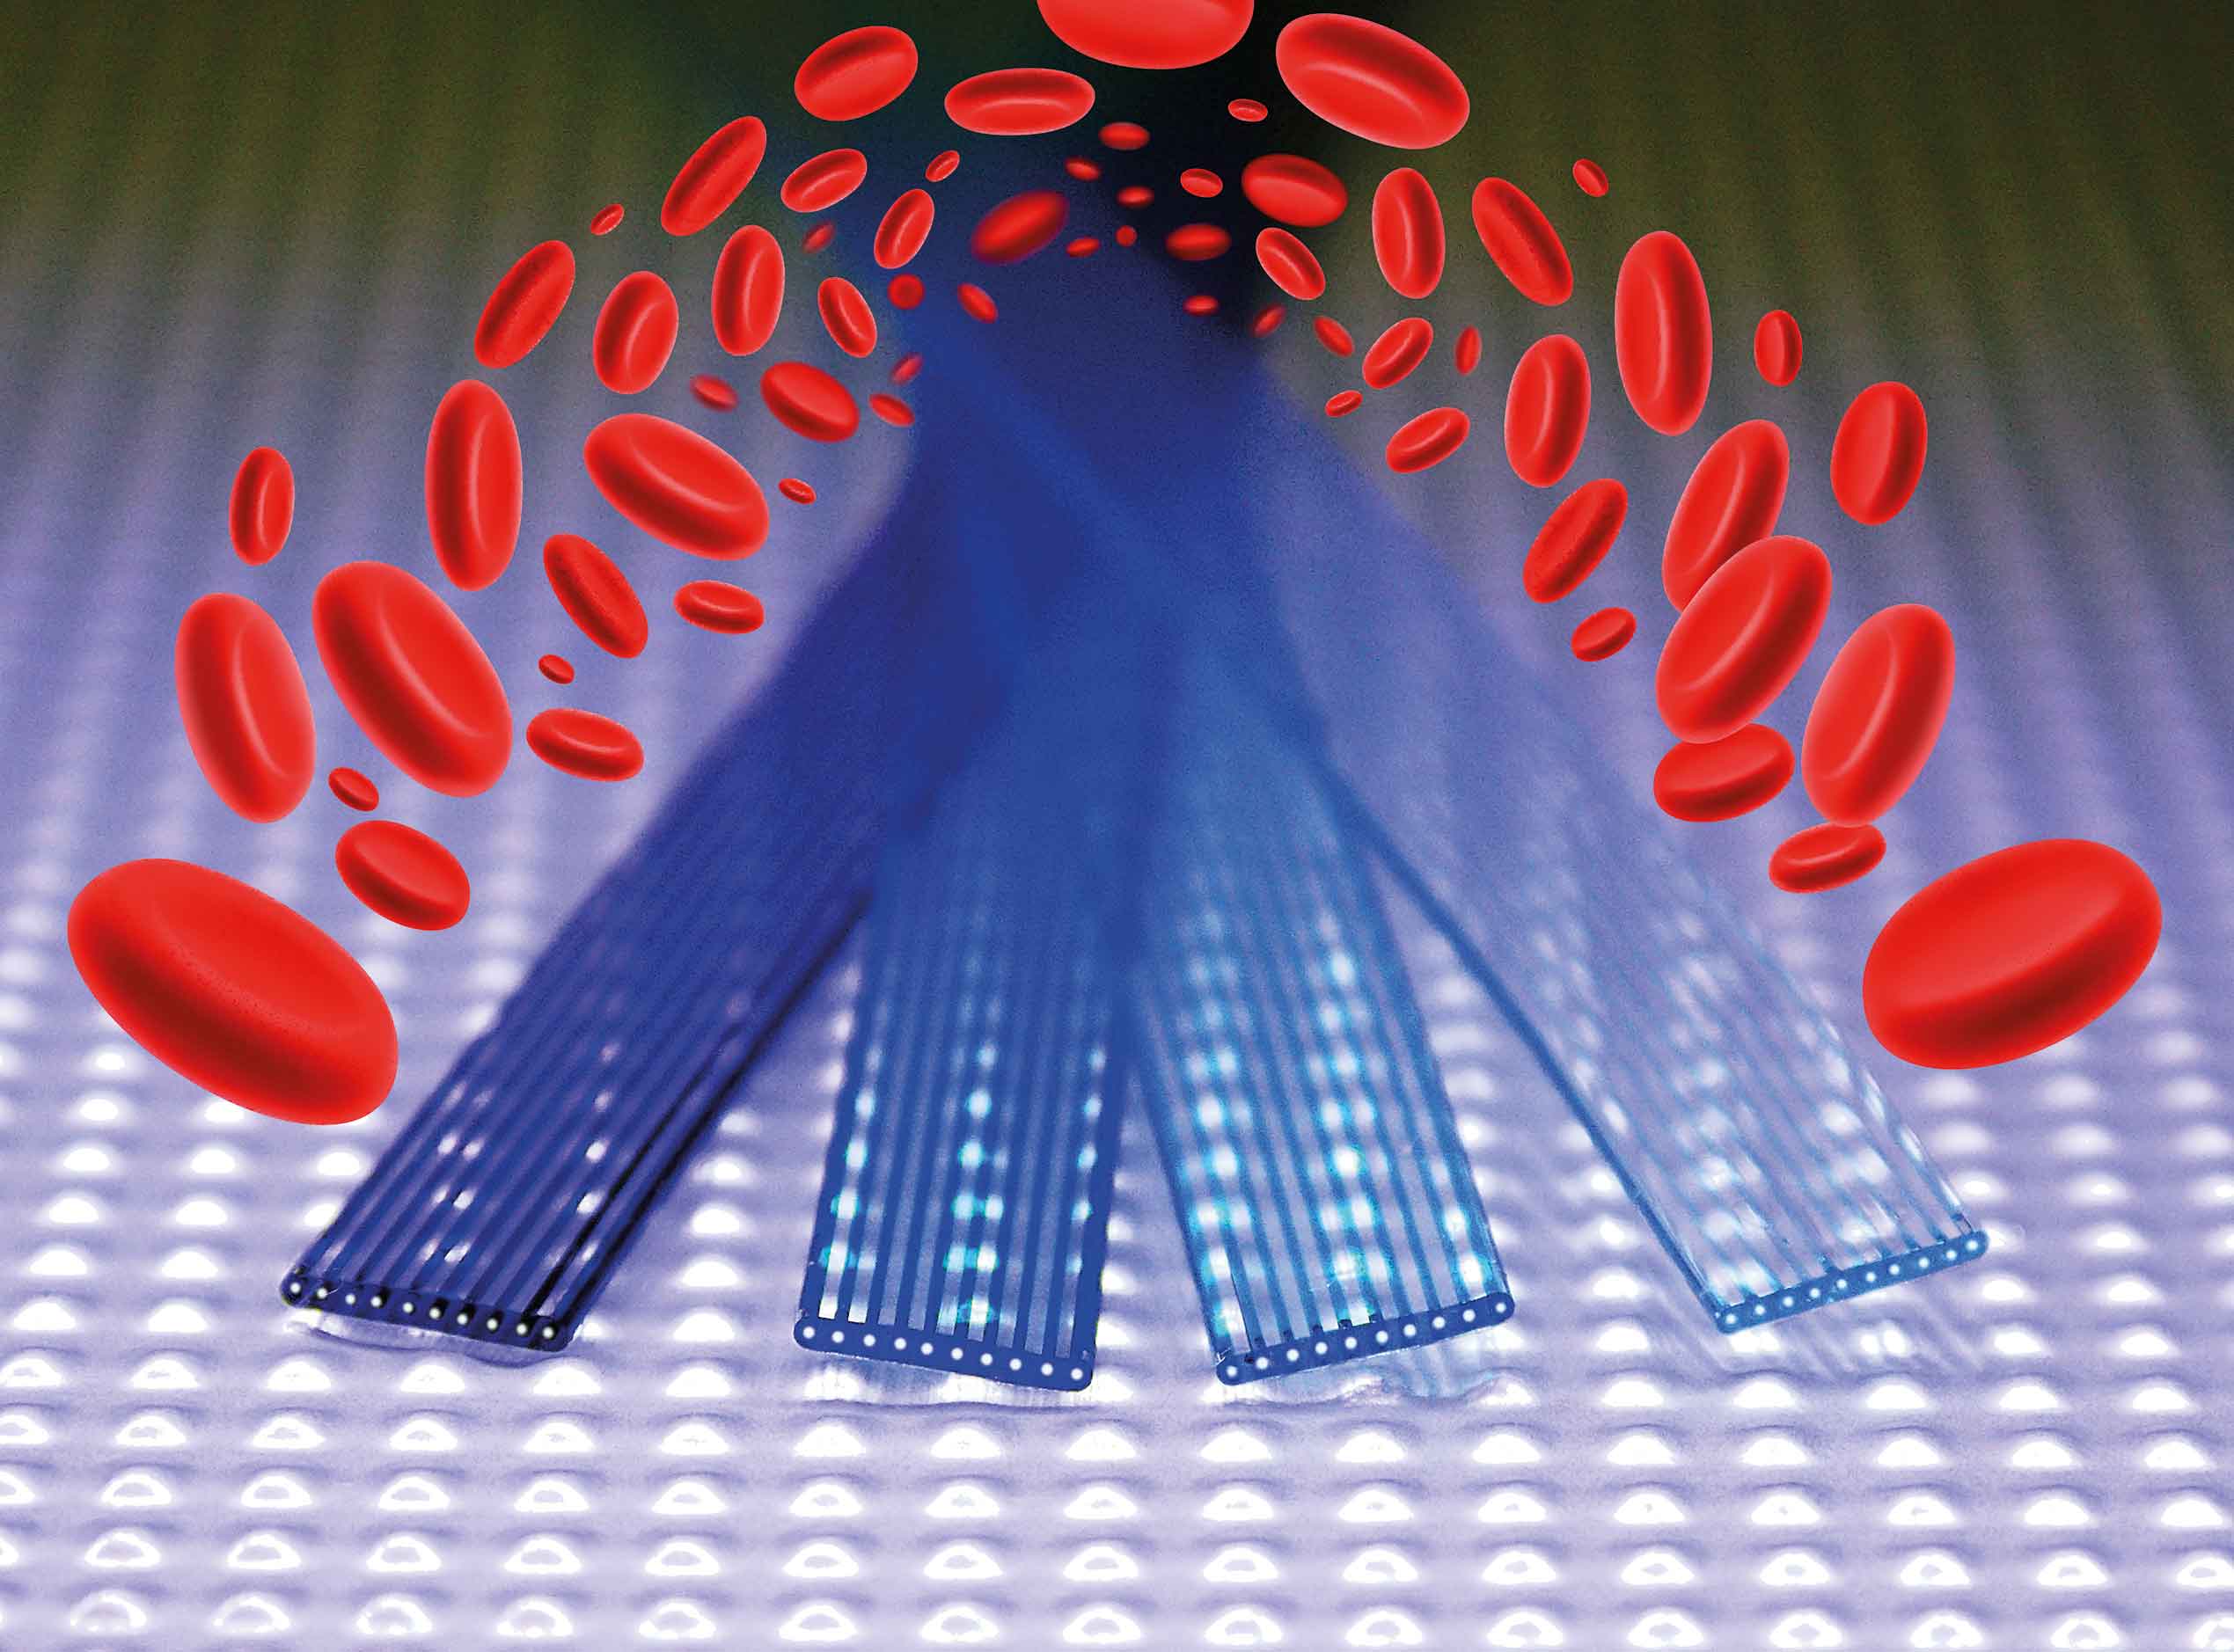 Fluoropolymer microcapillary film for an affordable microfluidic ELISA platform: Reis et al., Lab Chip 2014:14; 2918